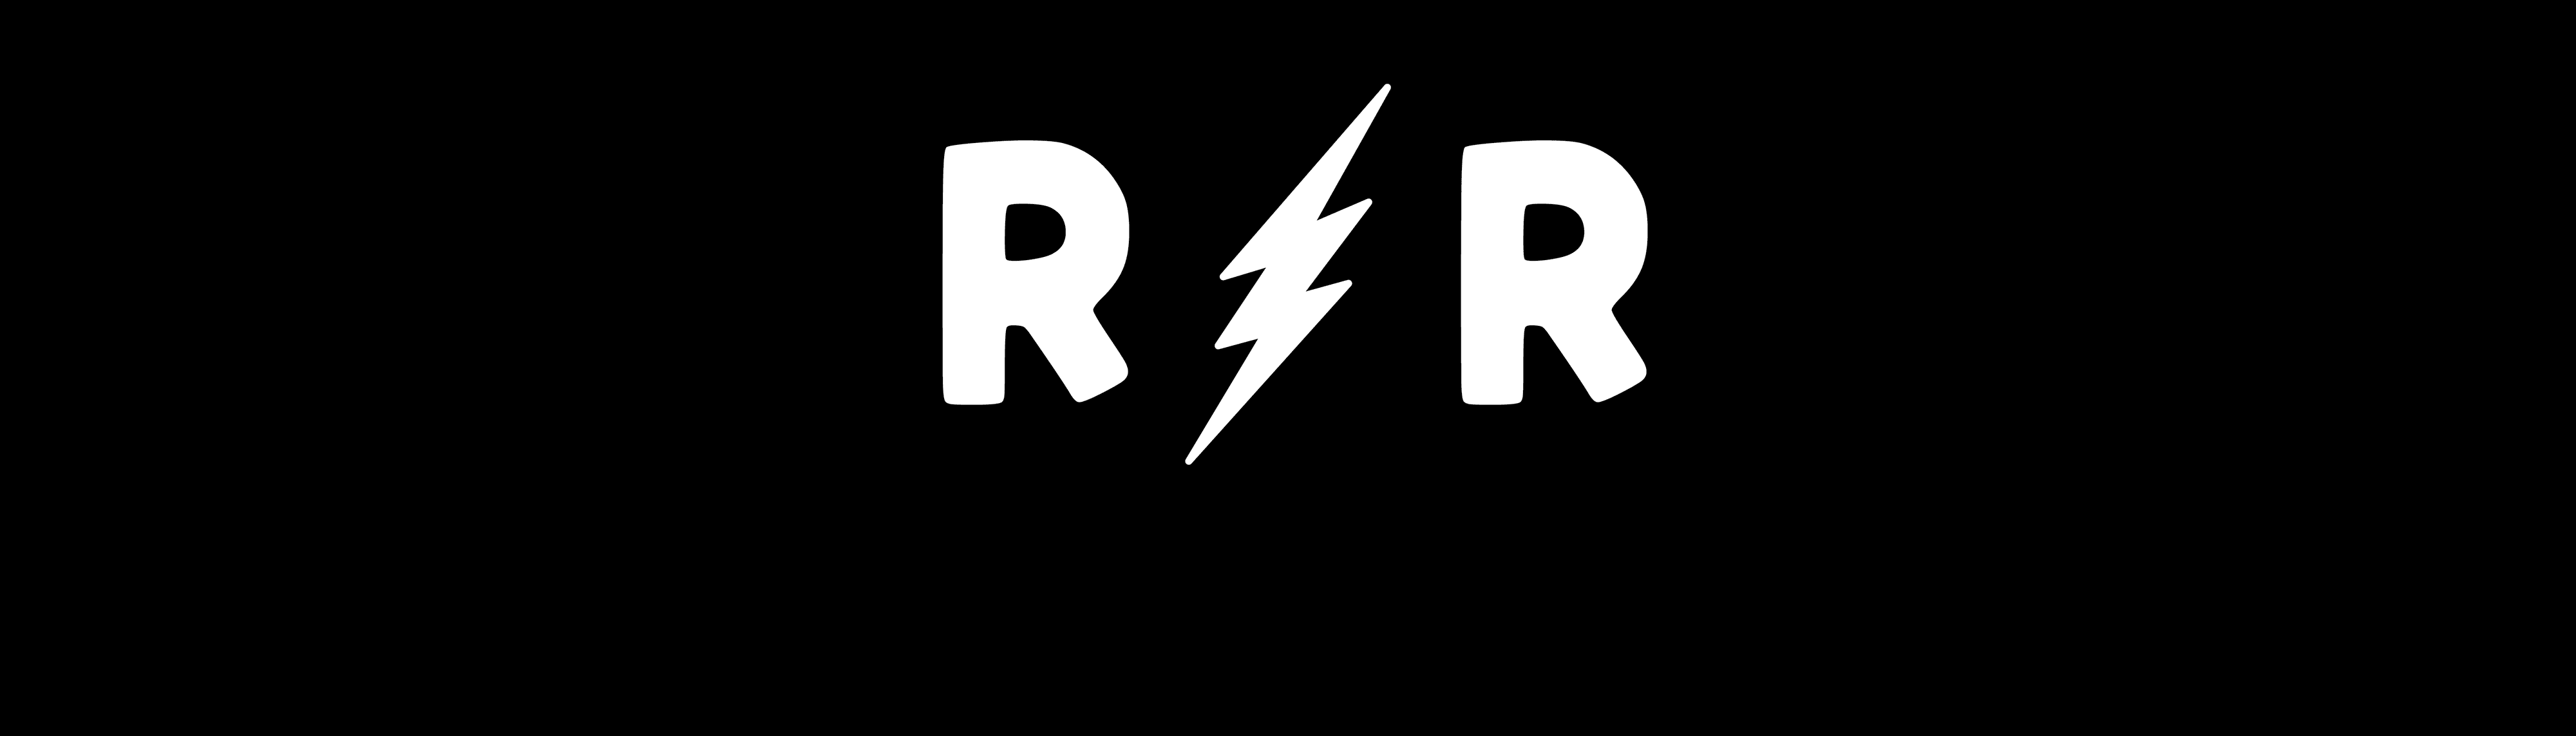 RaiderRob banner